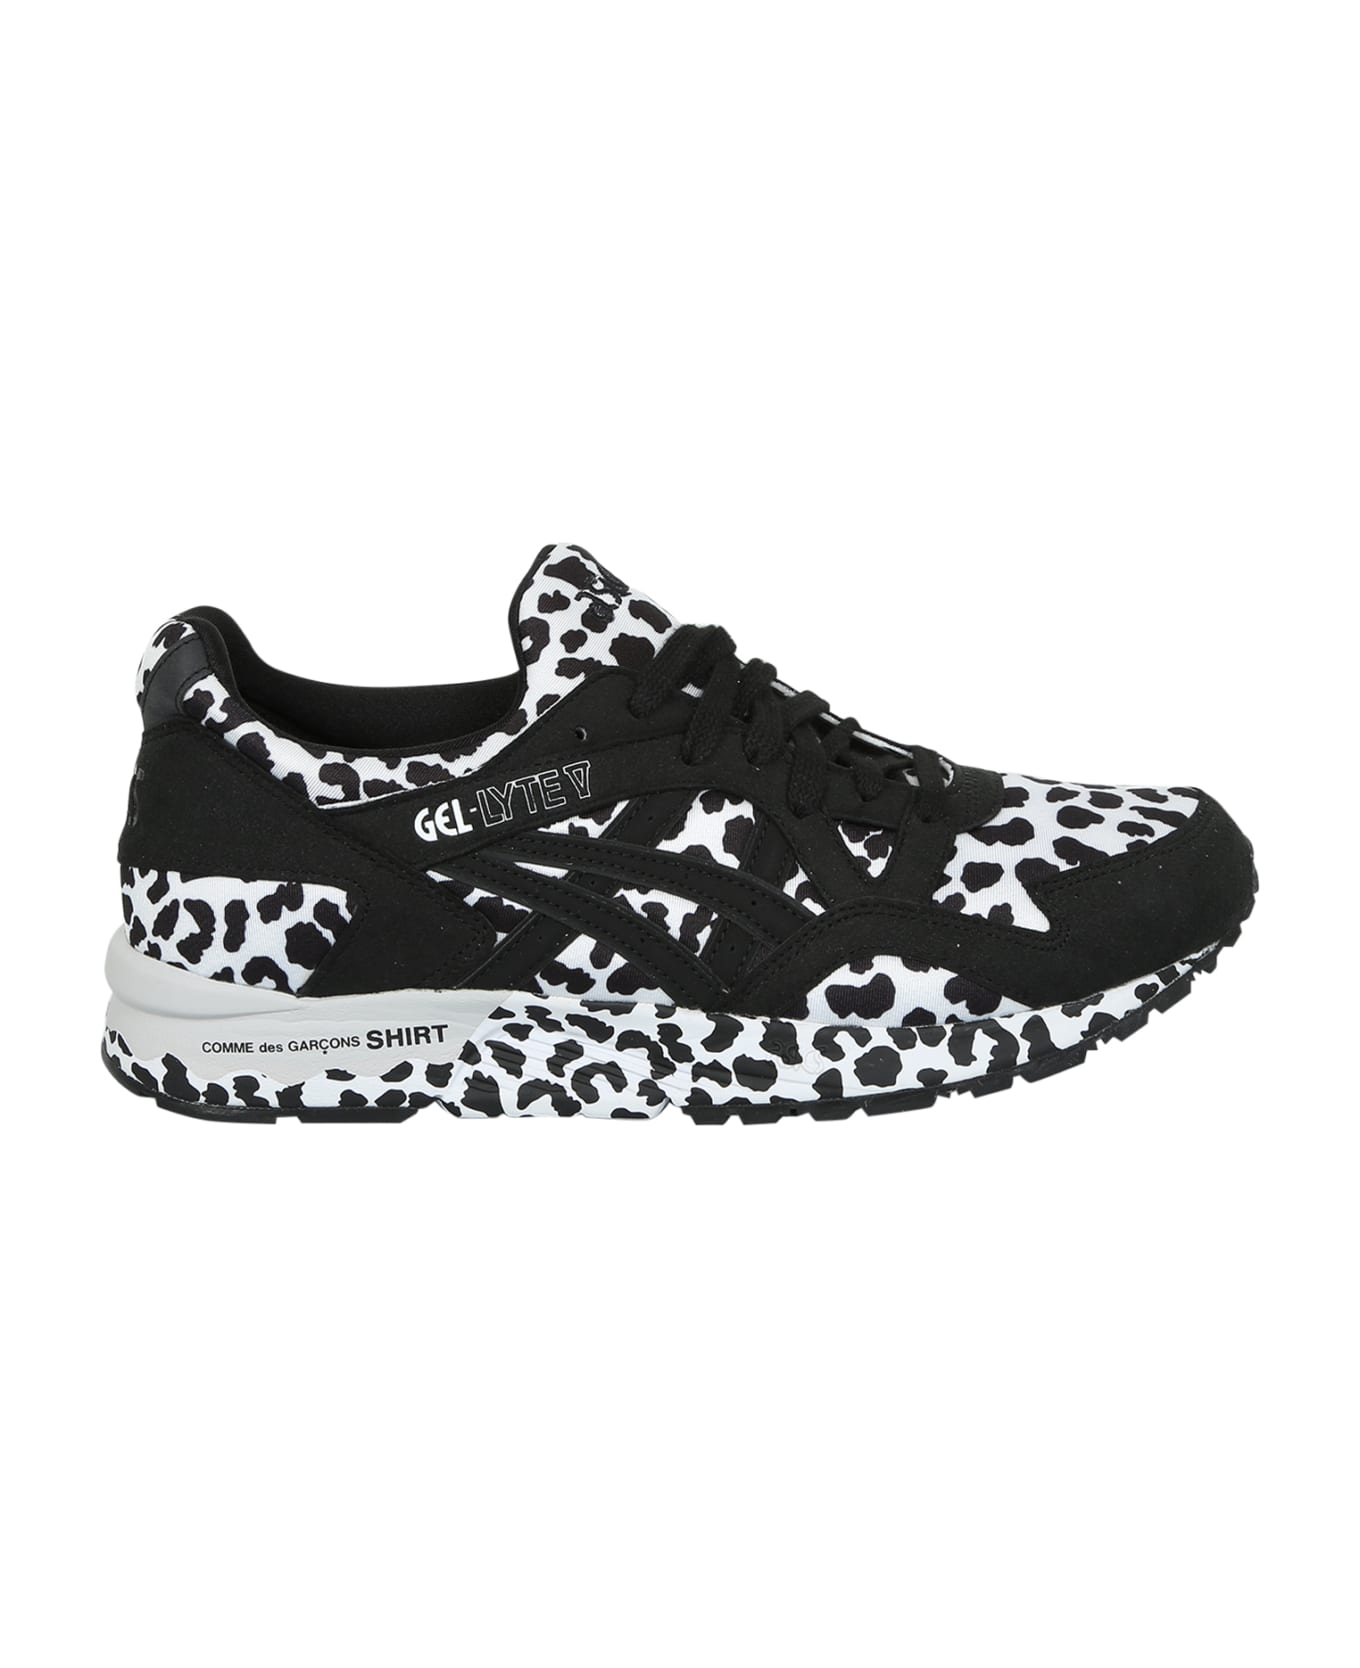 Comme des Garçons Shirt Leopard Print Asics Gel Lyte Sneakers - Black スニーカー